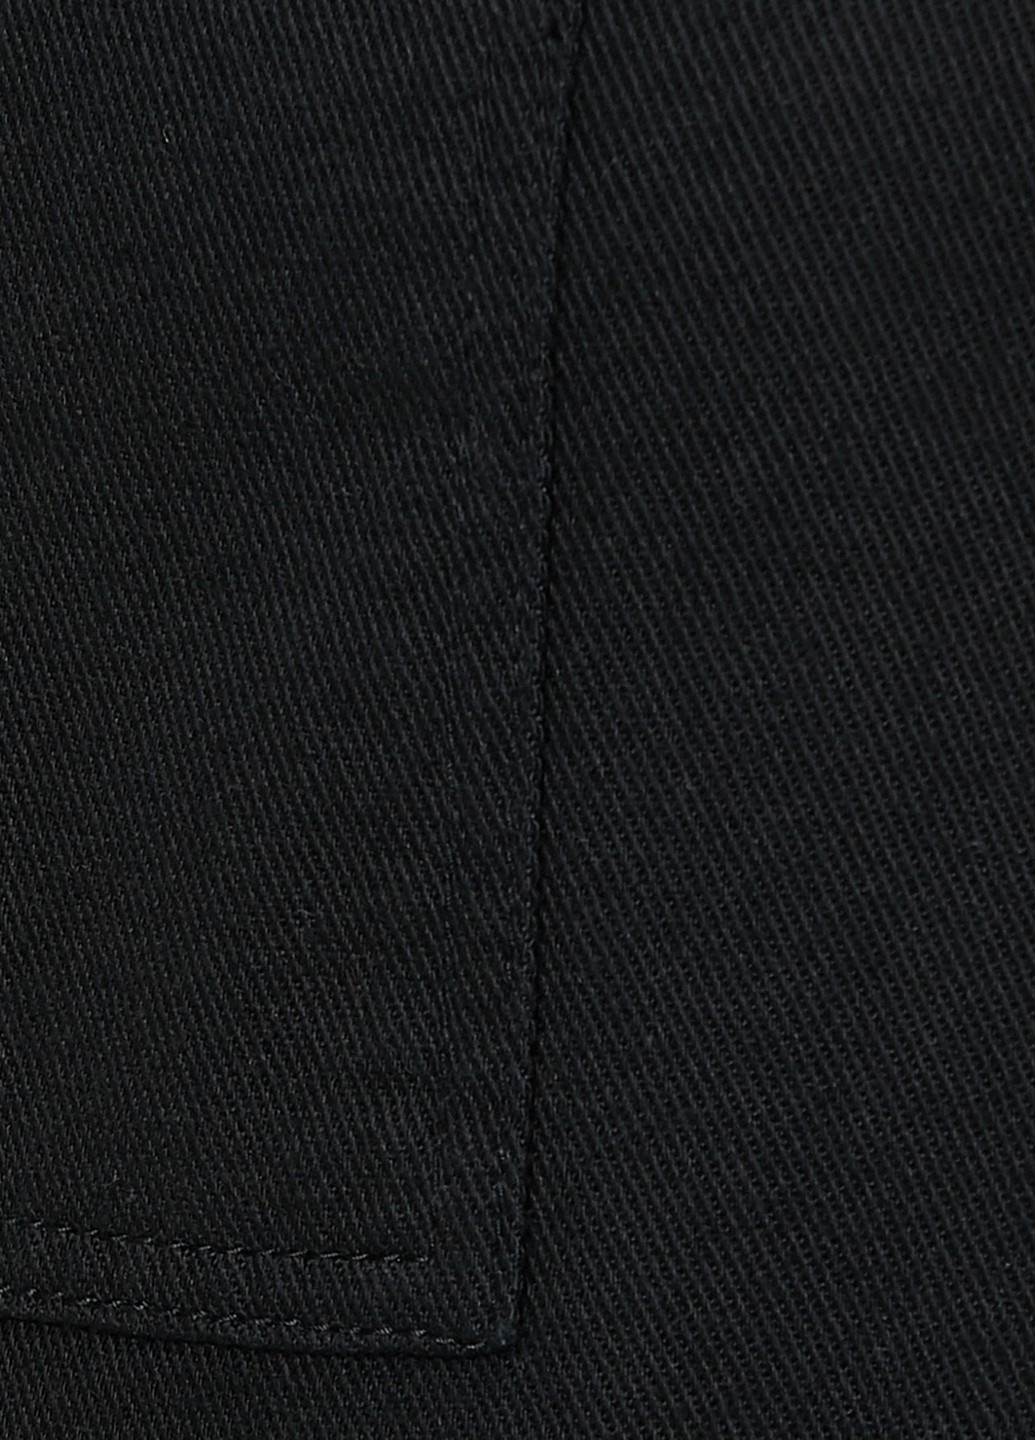 Комбинезон KOTON комбинезон-брюки однотонный чёрный денил хлопок